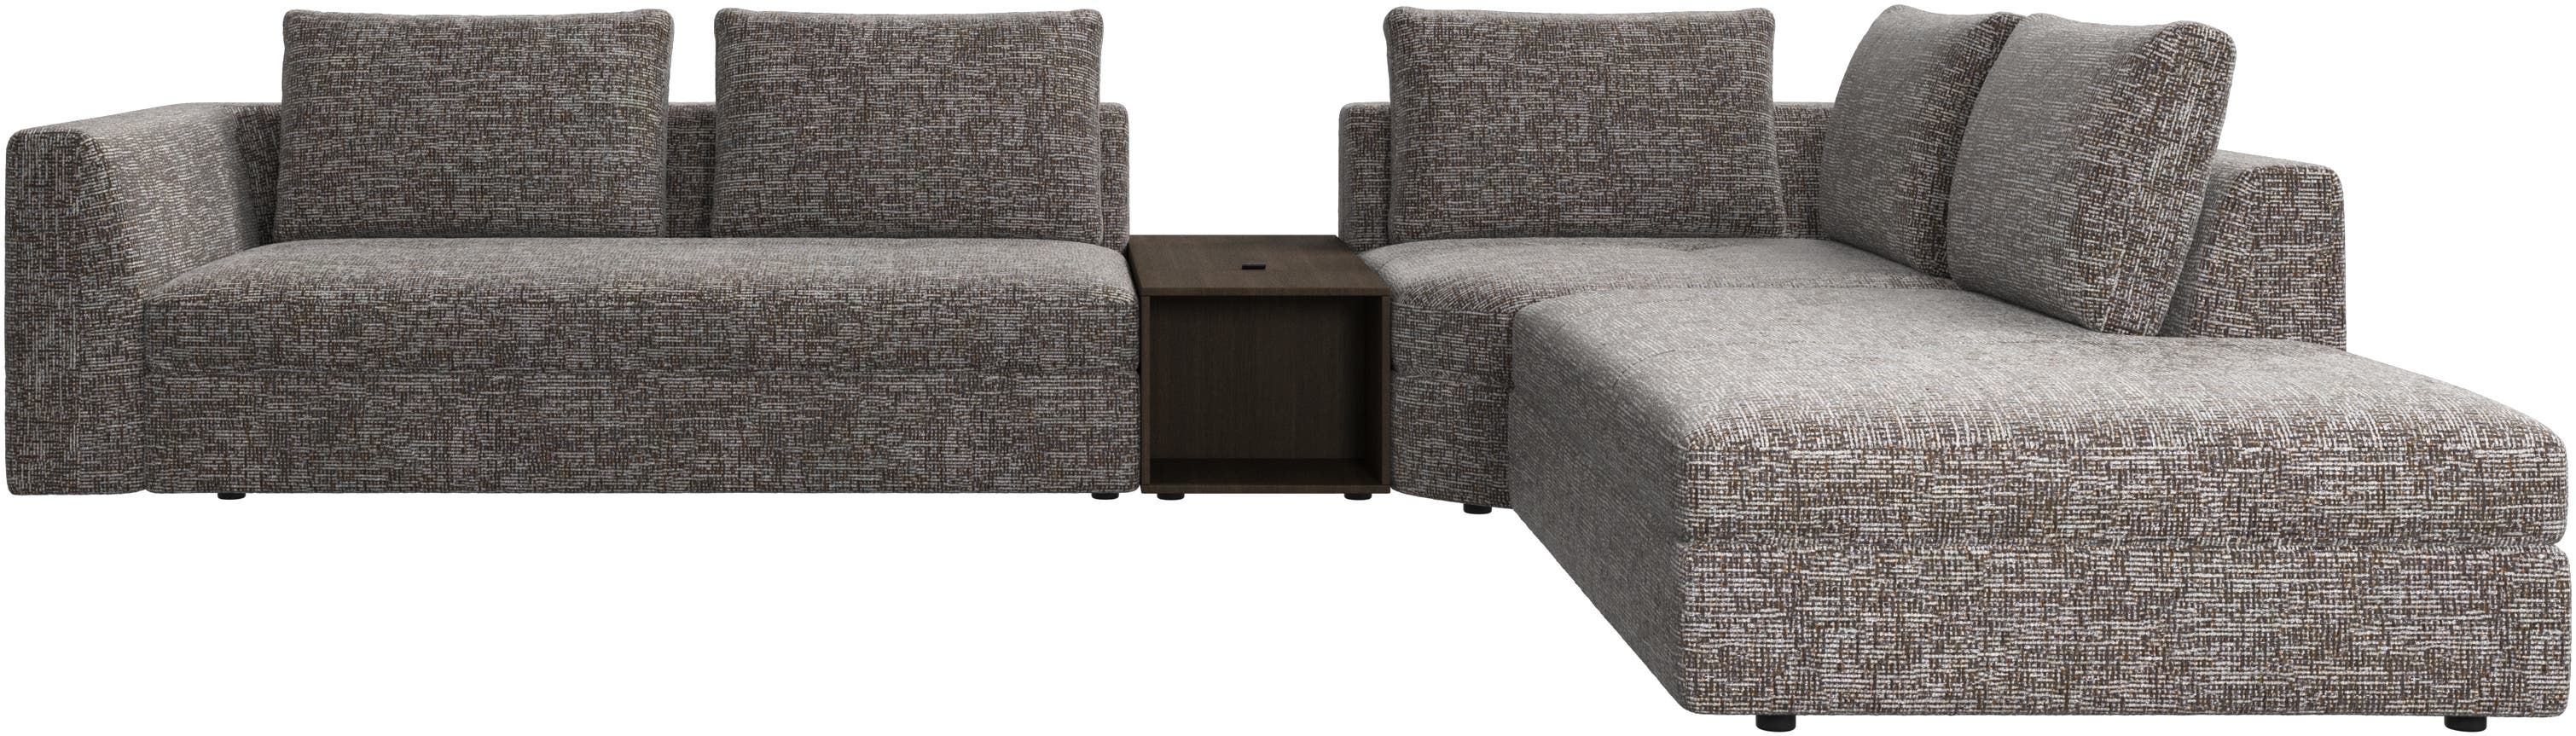 Bergamo corner sofa with lounging unit and pouf w/storage